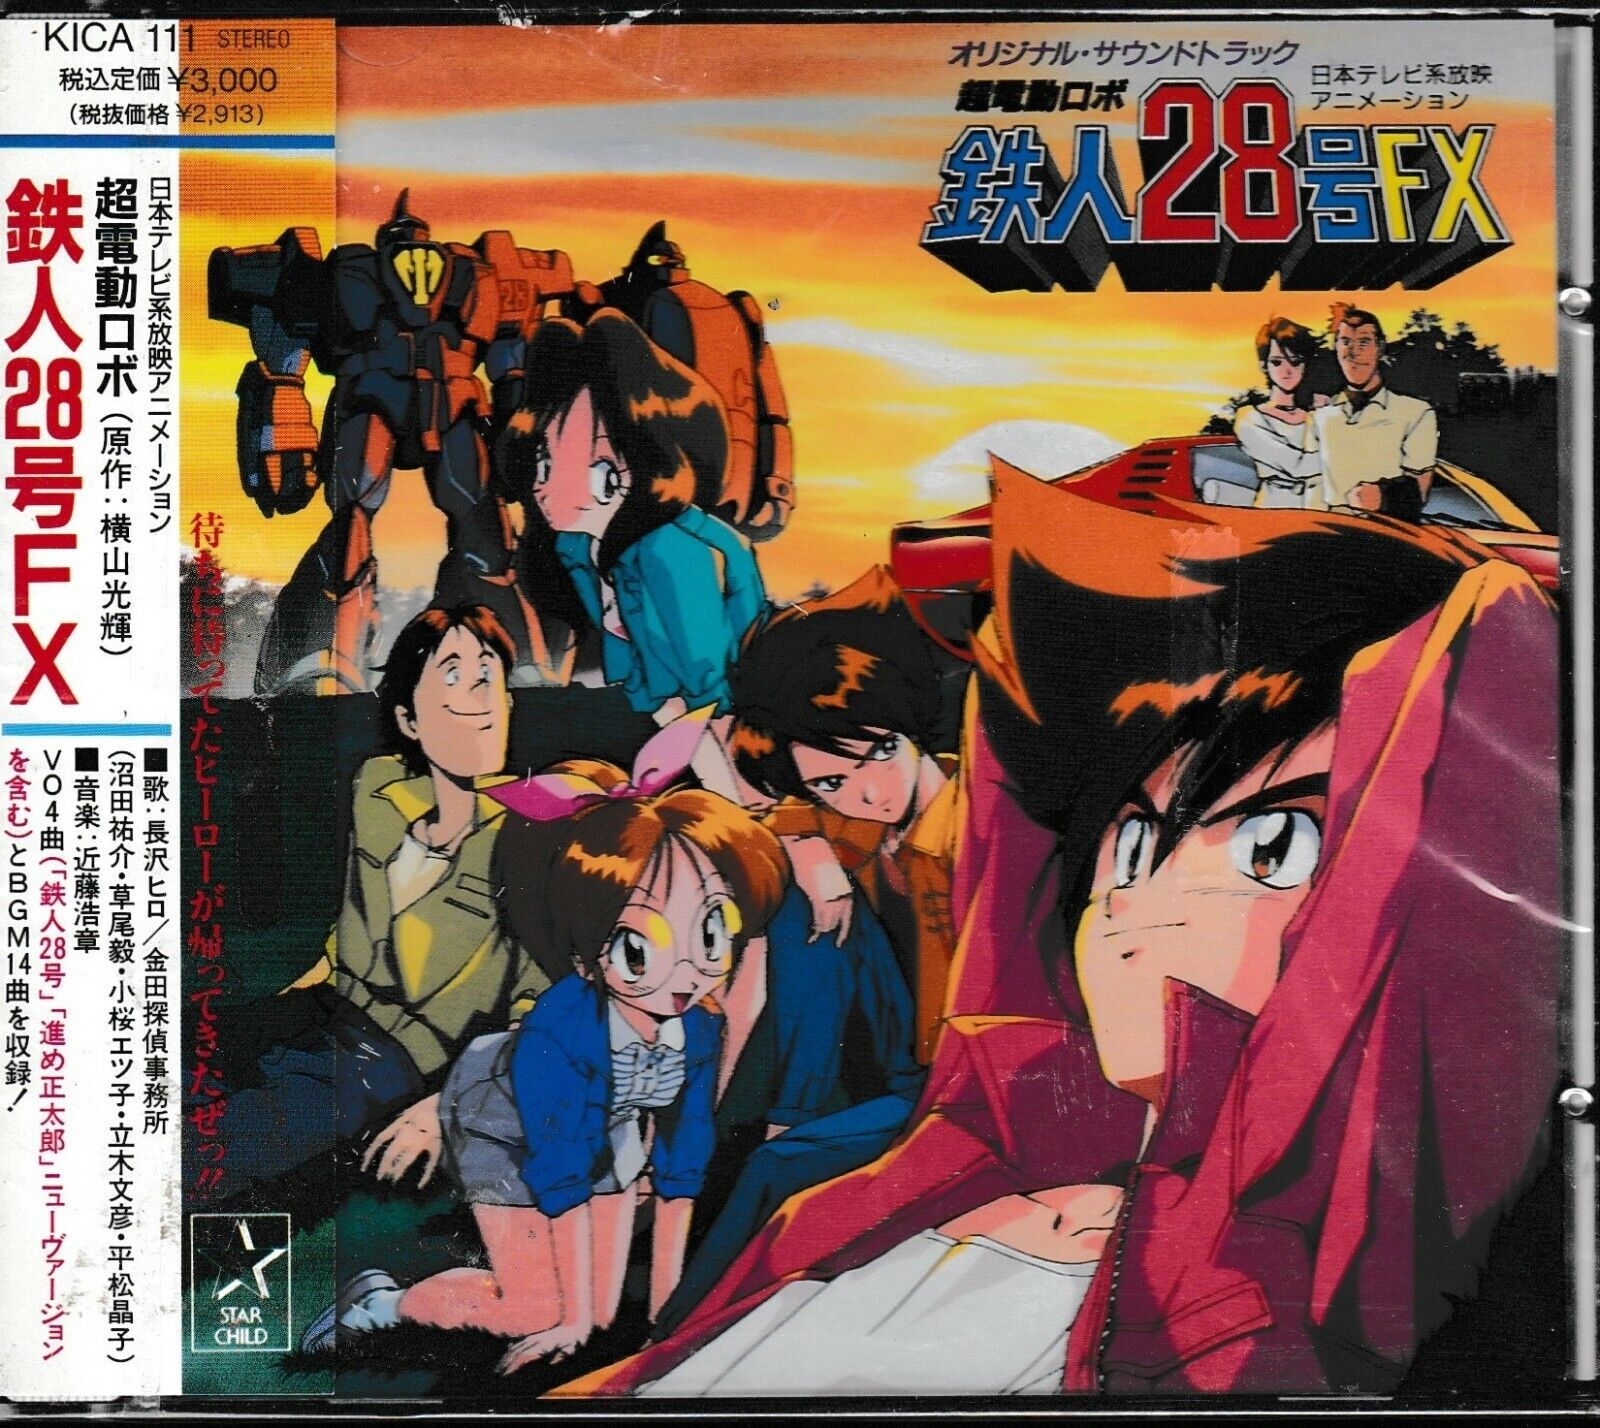 Tetsujin 28 Animation OST CD Soundtrack Anime Original Japanese